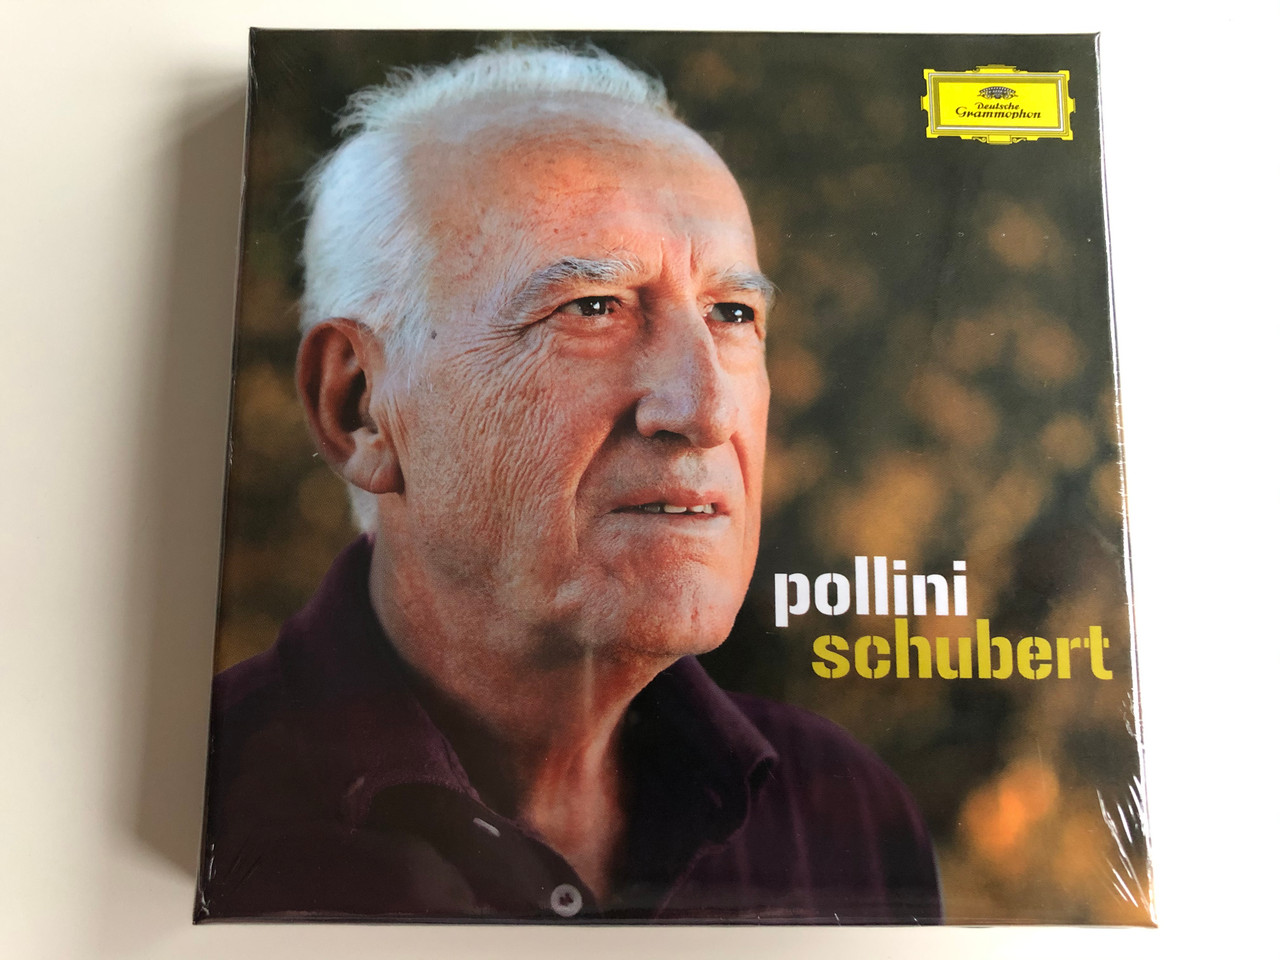 Pollini– Schubert / Deutsche Grammophon ‎3x Audio CD, Box Set 2013 / 479  2290 - bibleinmylanguage